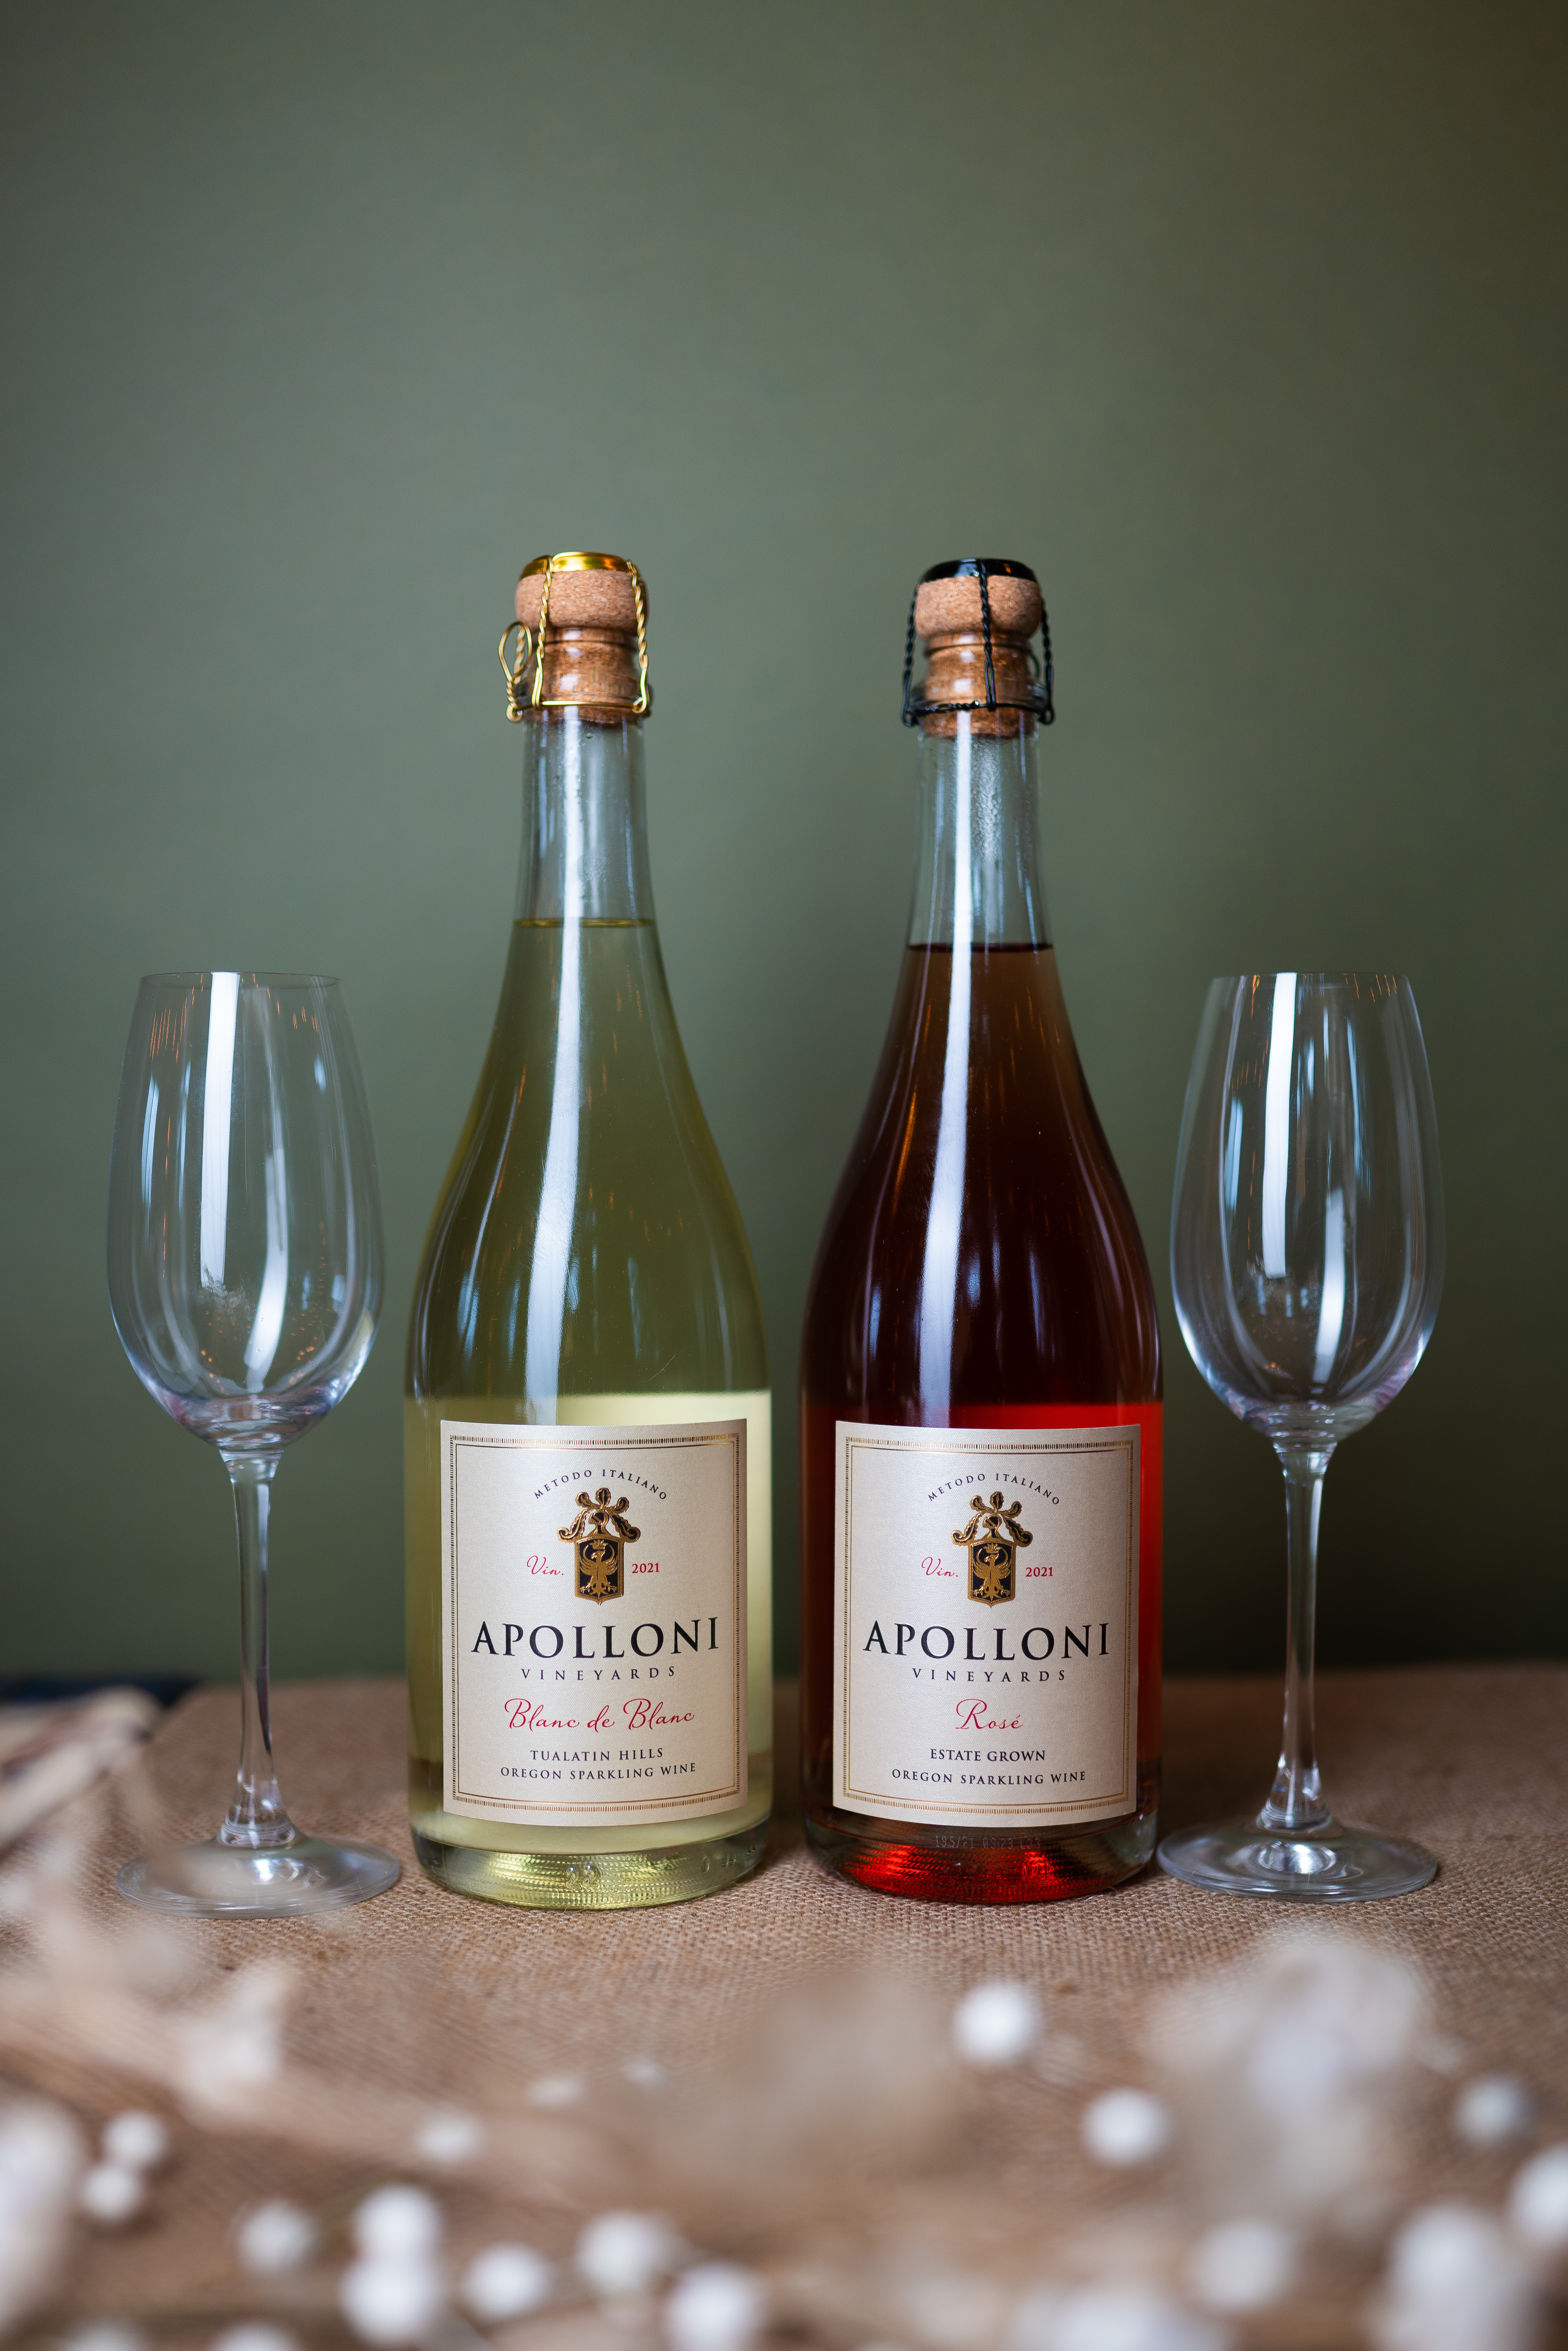 Two bottles of Apolloni sparkling wine